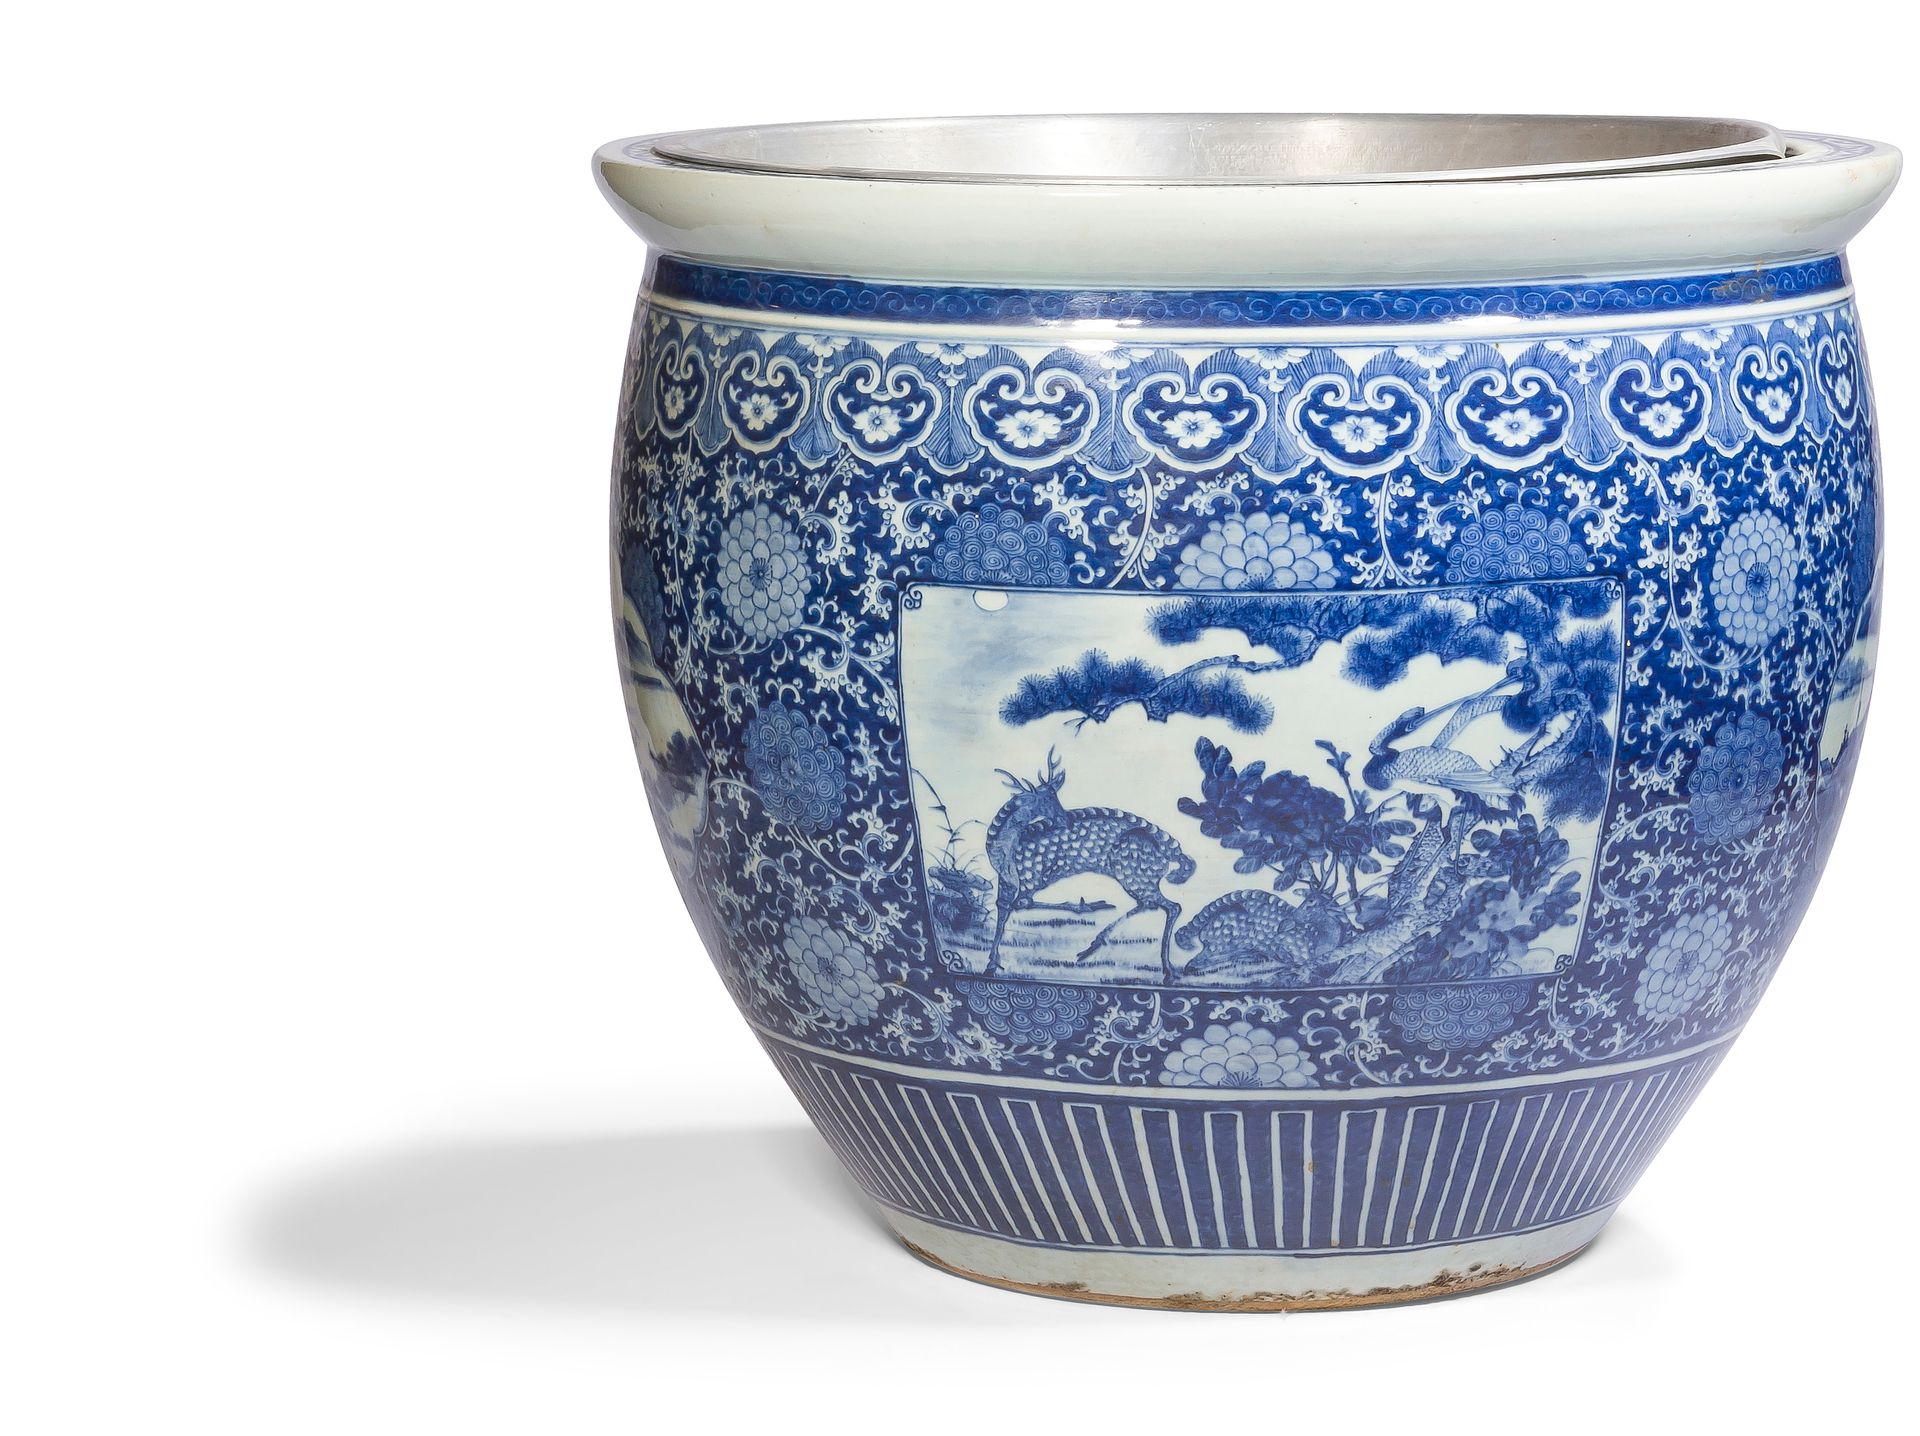 Null Large porcelain basin, China, 18th century 
Decorated in blue underglaze wi&hellip;